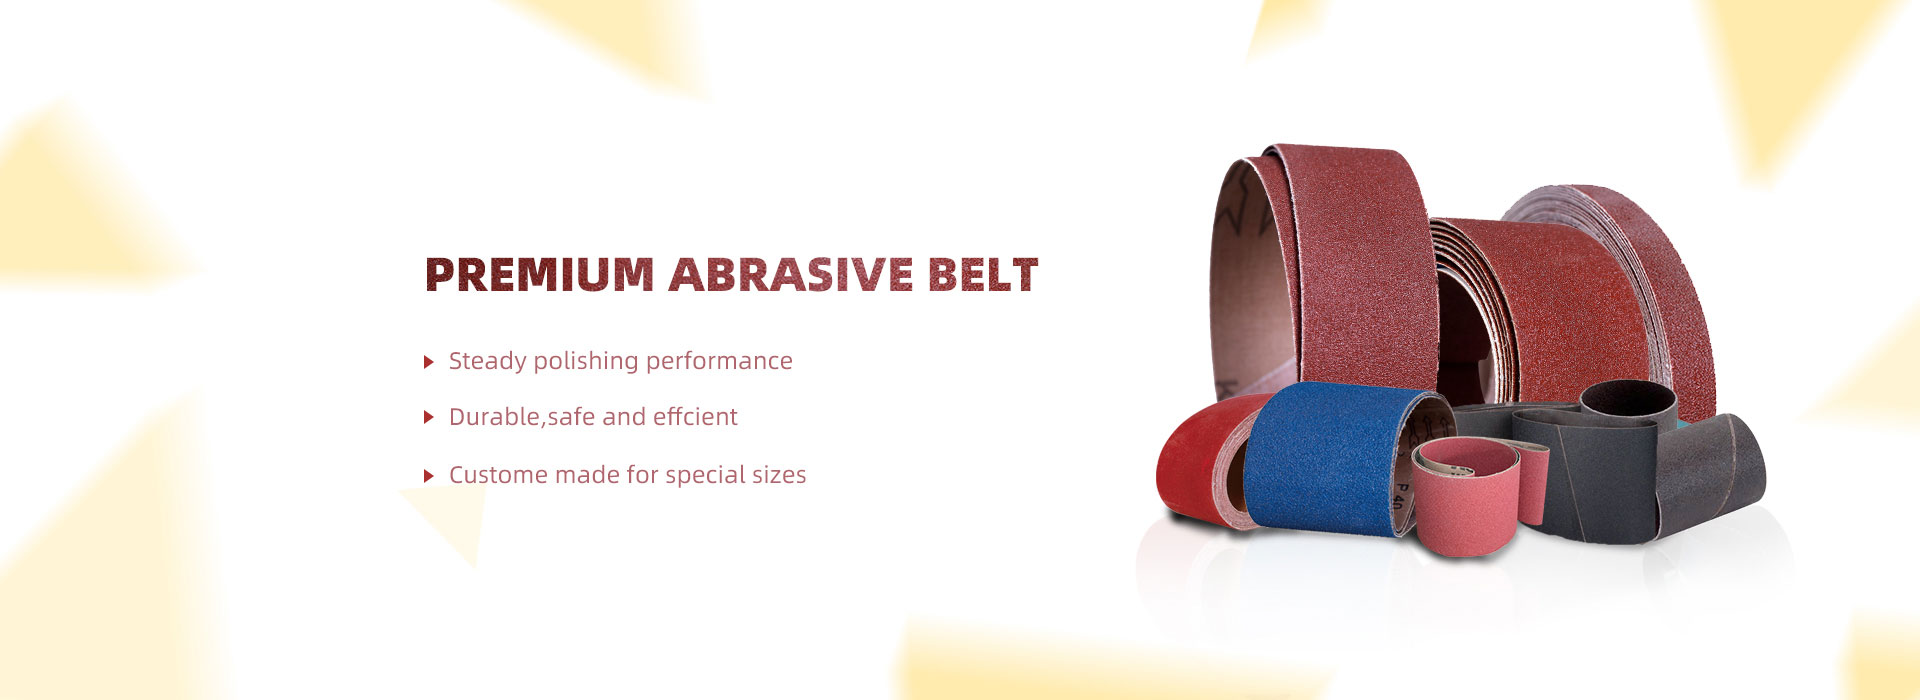  Abrasive belt